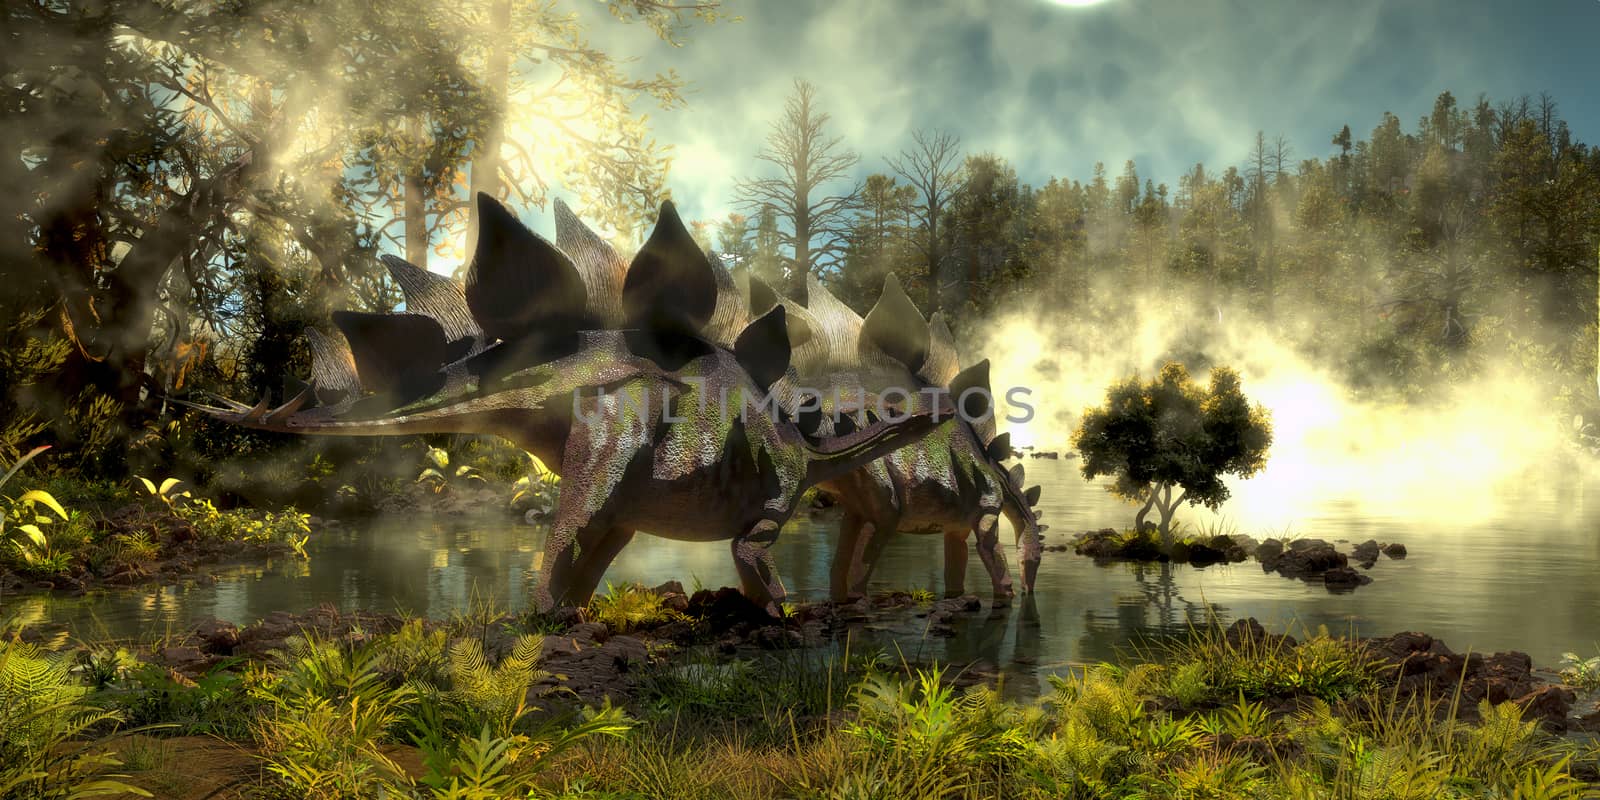 Stegosaurus in Swamp by Catmando